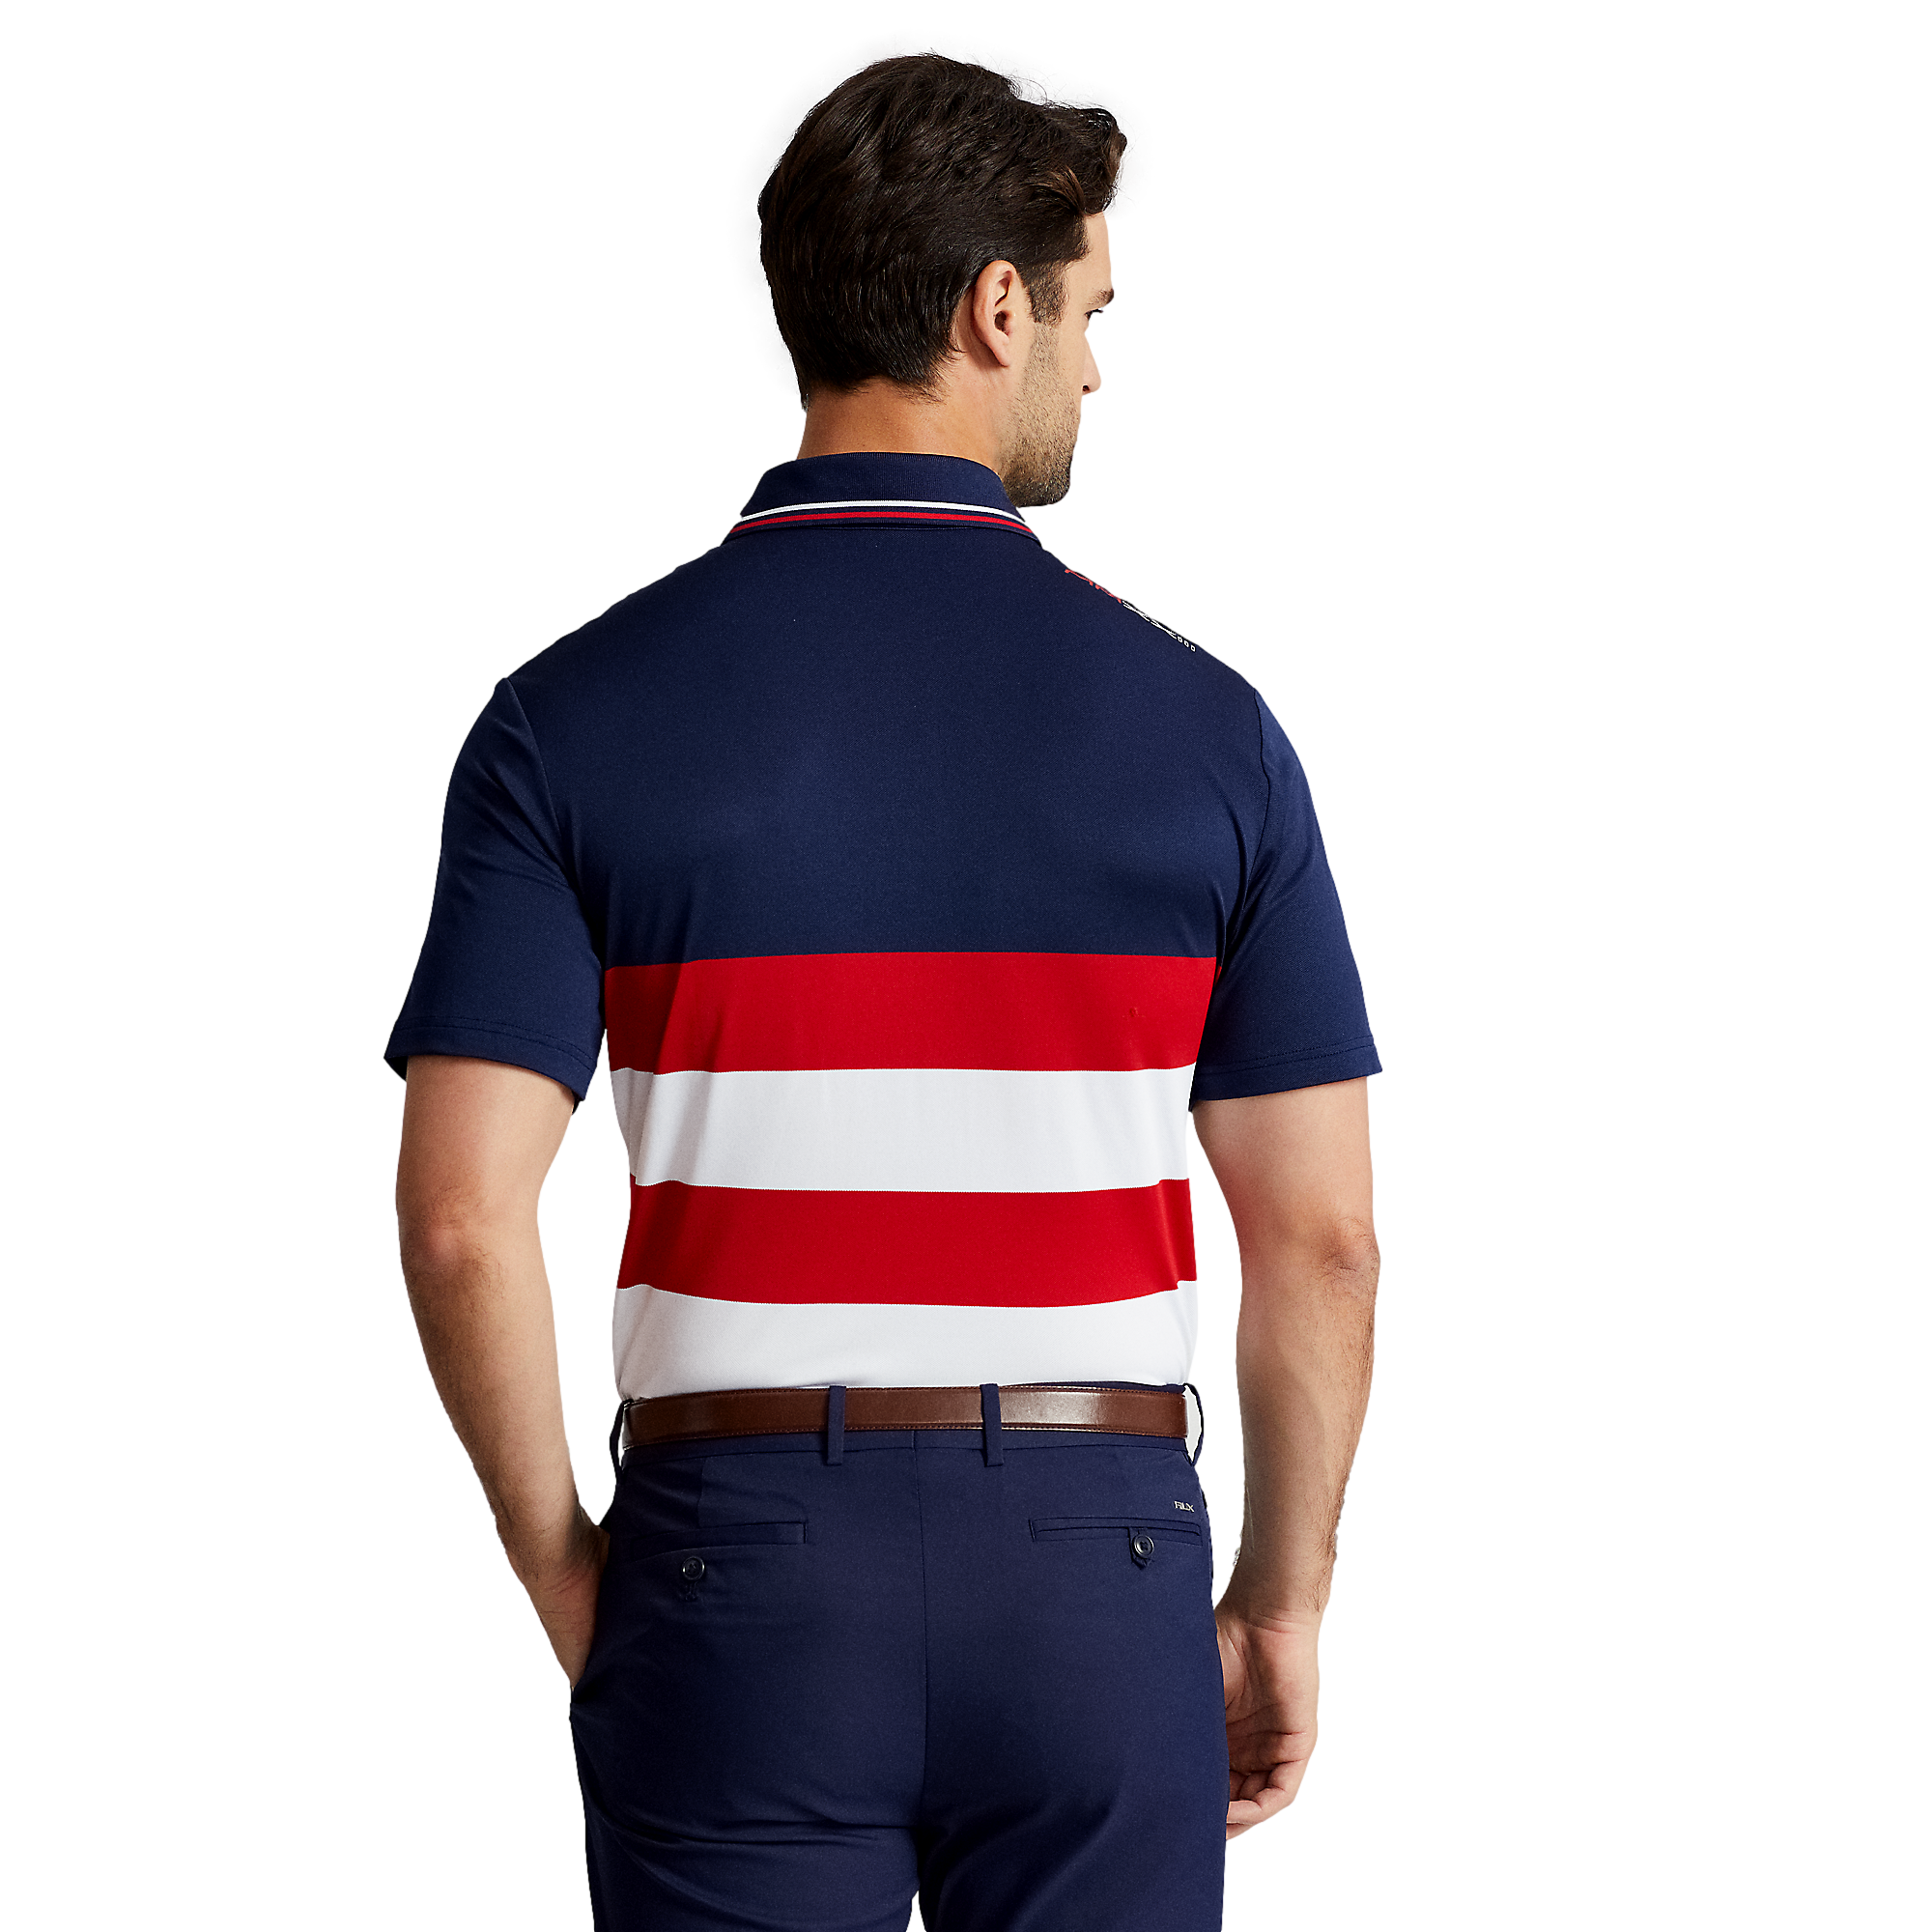 Ralph Lauren Men's U.S. Ryder Cup Uniform Polo Shirt - Size XL in Ceramic White